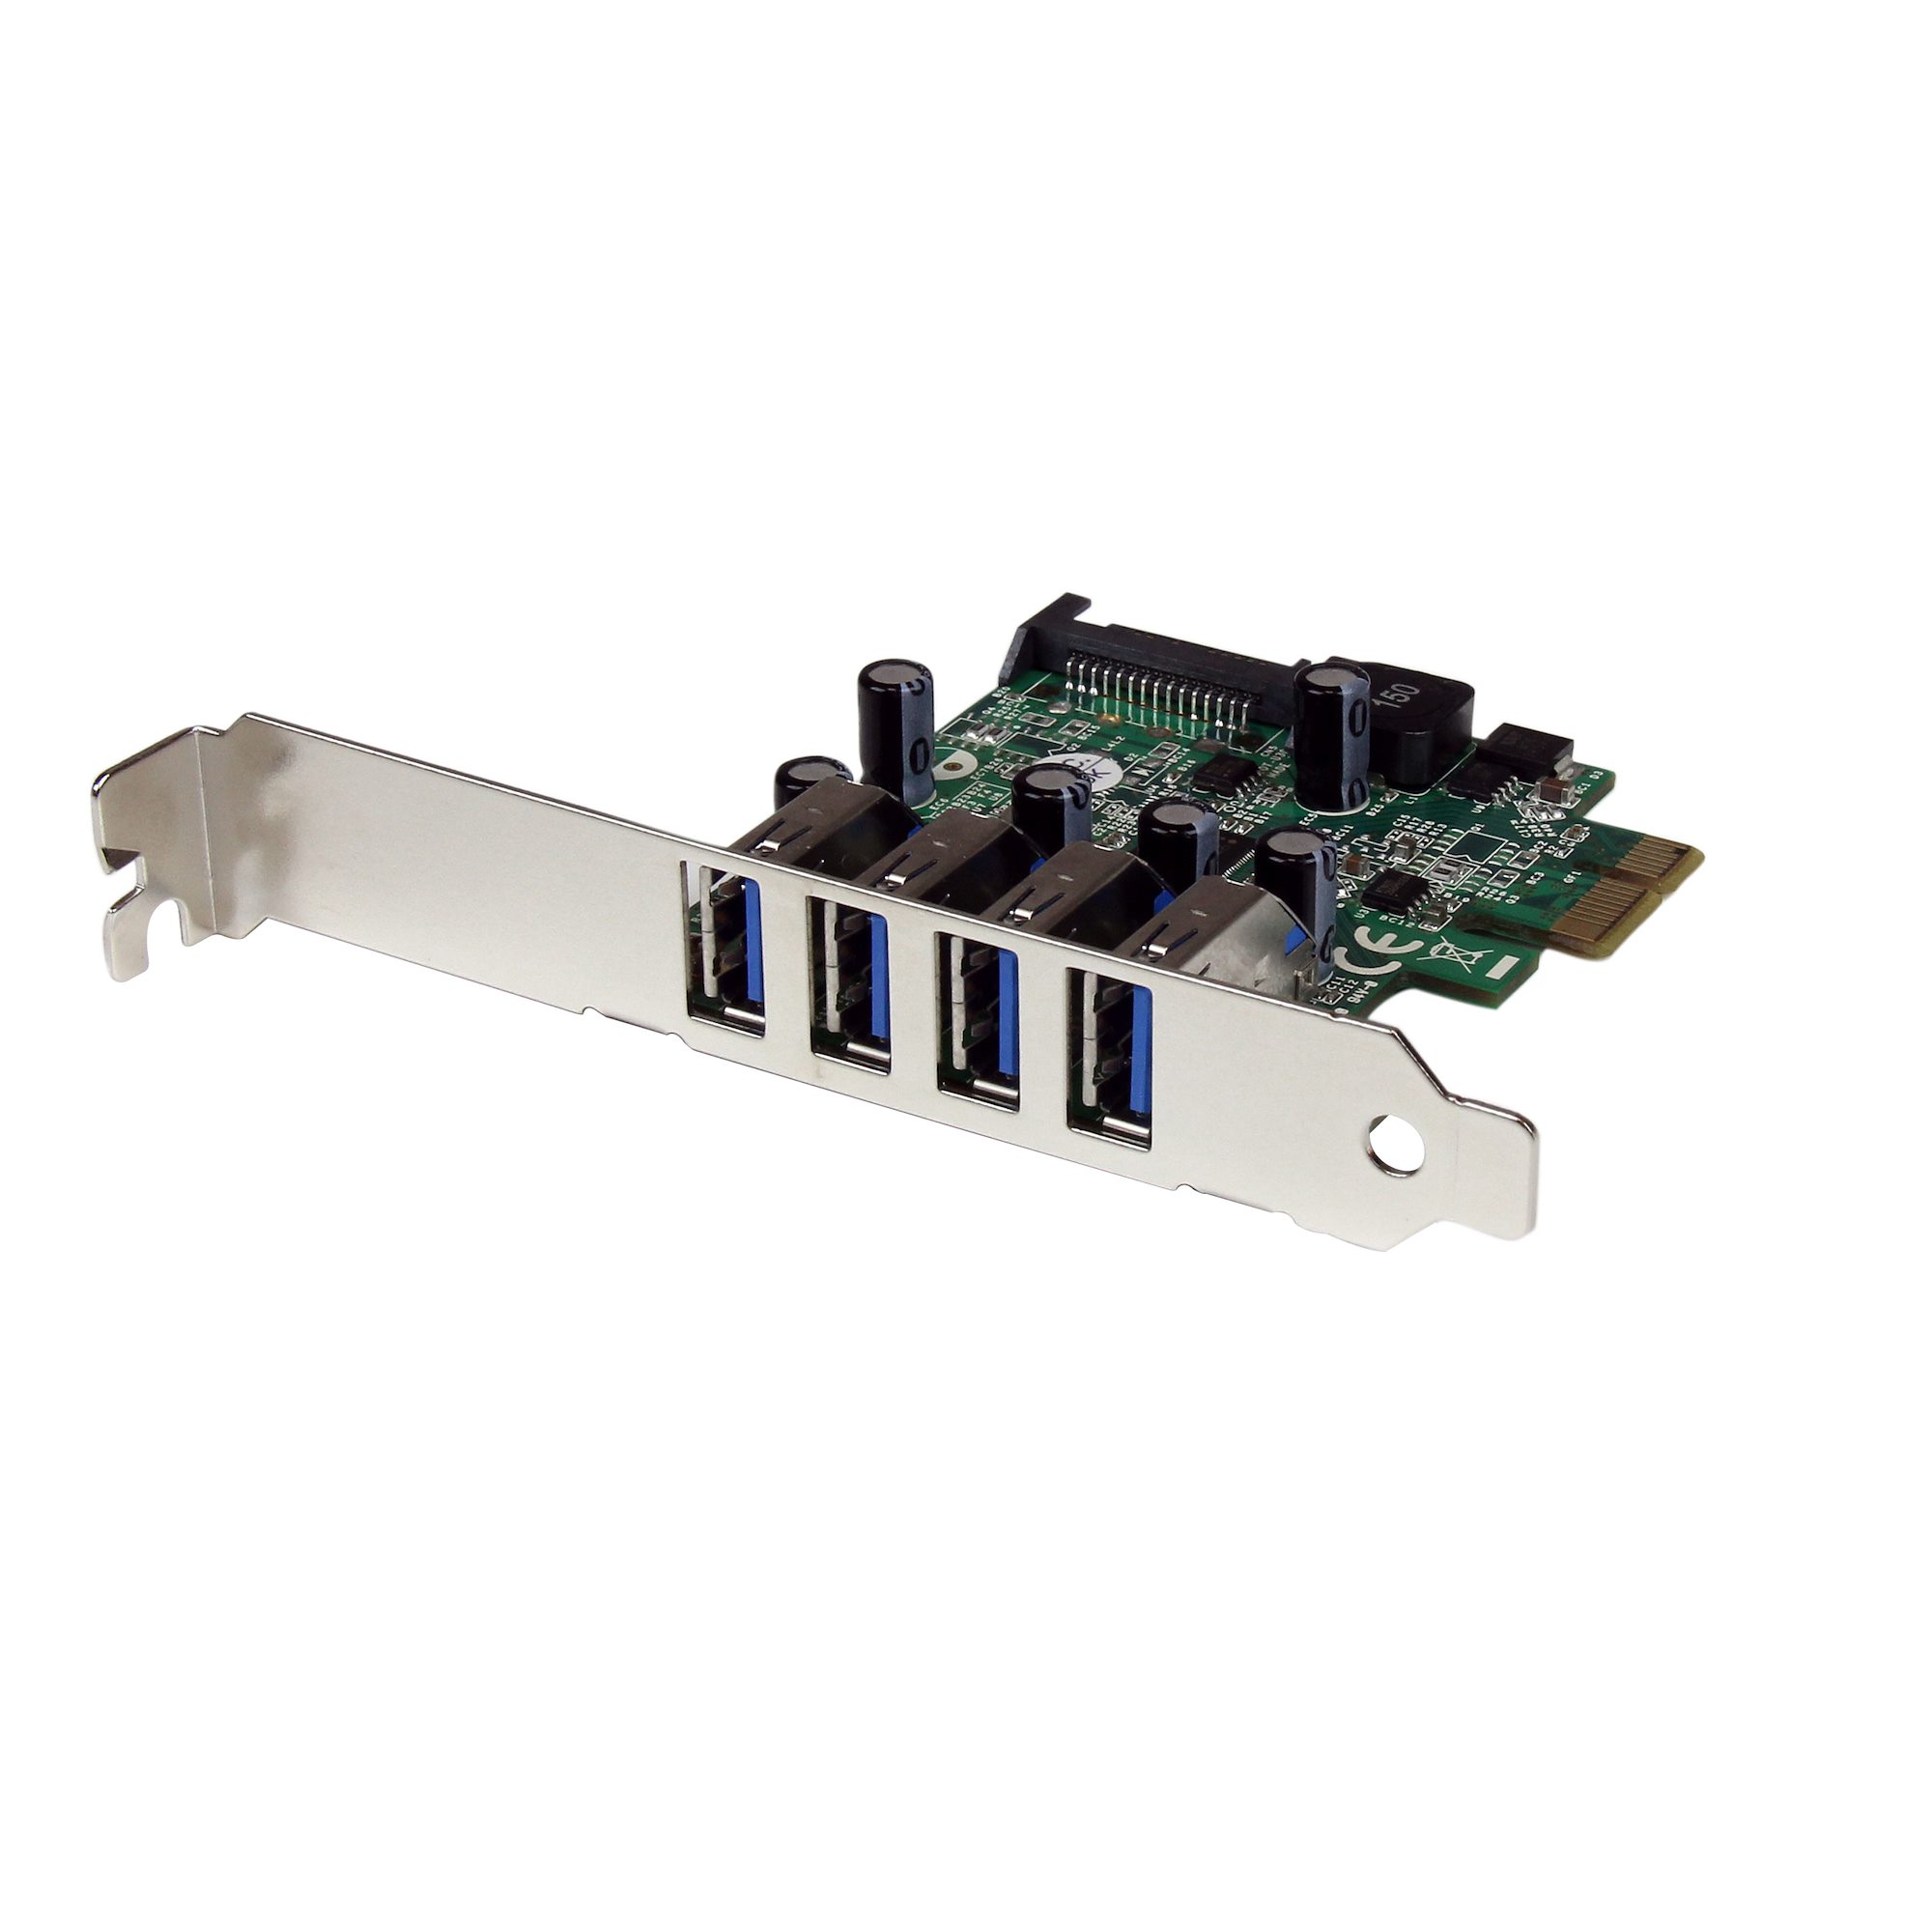 【PEXUSB3S4V】4 PORT PCIE USB 3.0 CARD